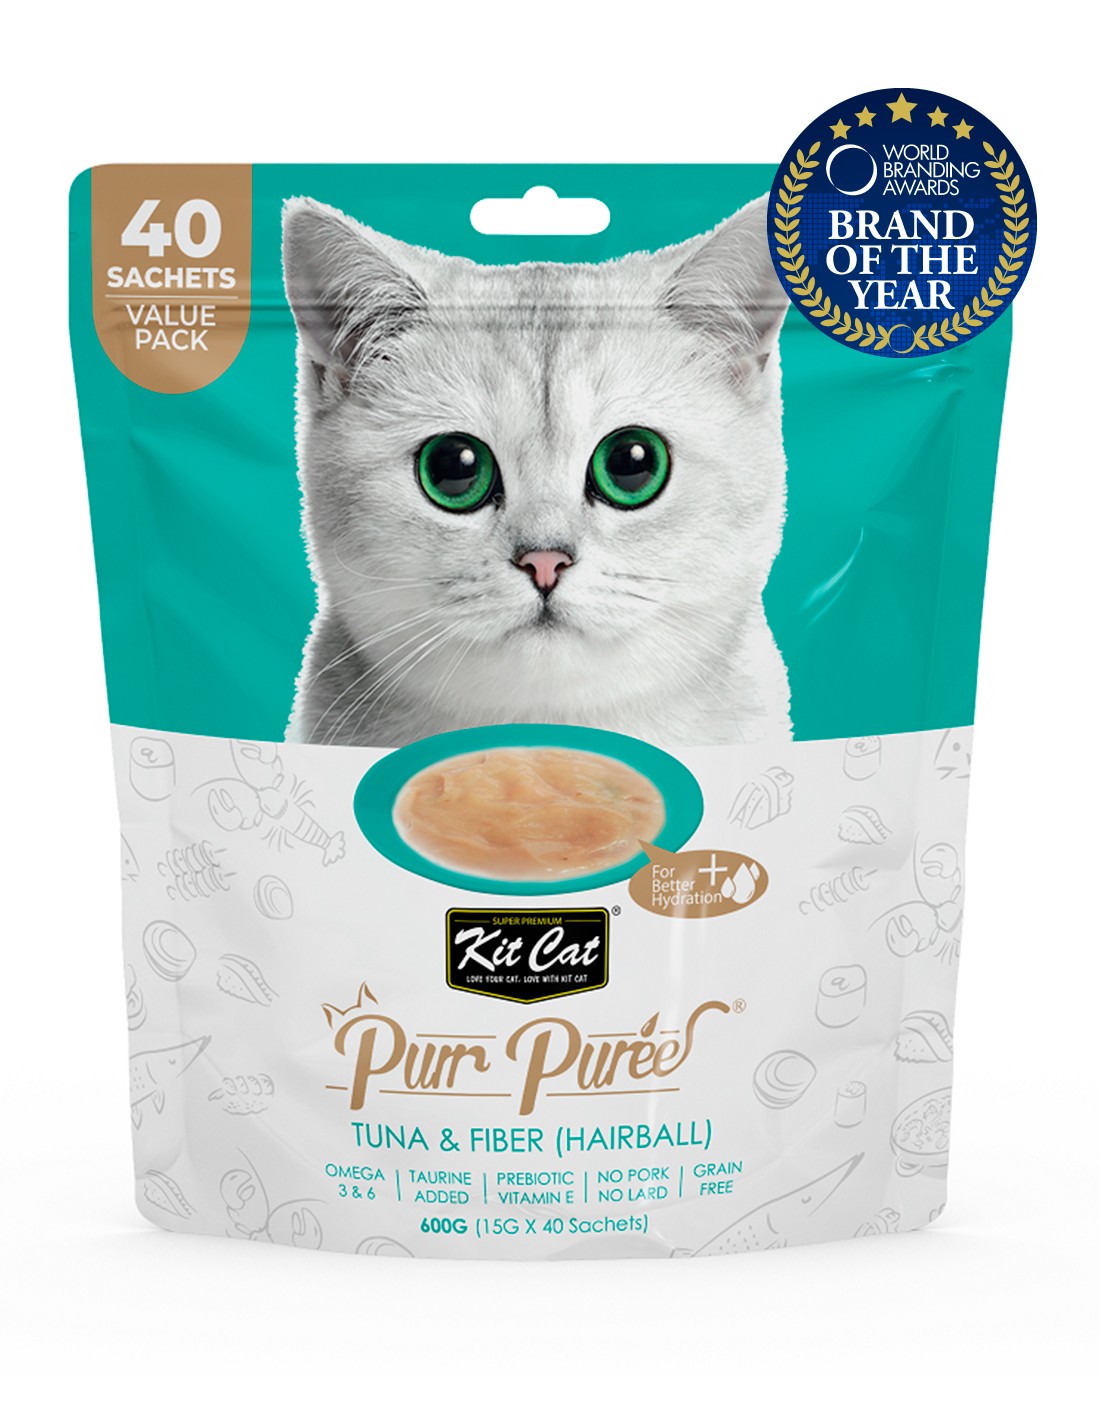 KIT CAT PurrPuree Value Pack - Atún y Fibra Hairball 40x15g